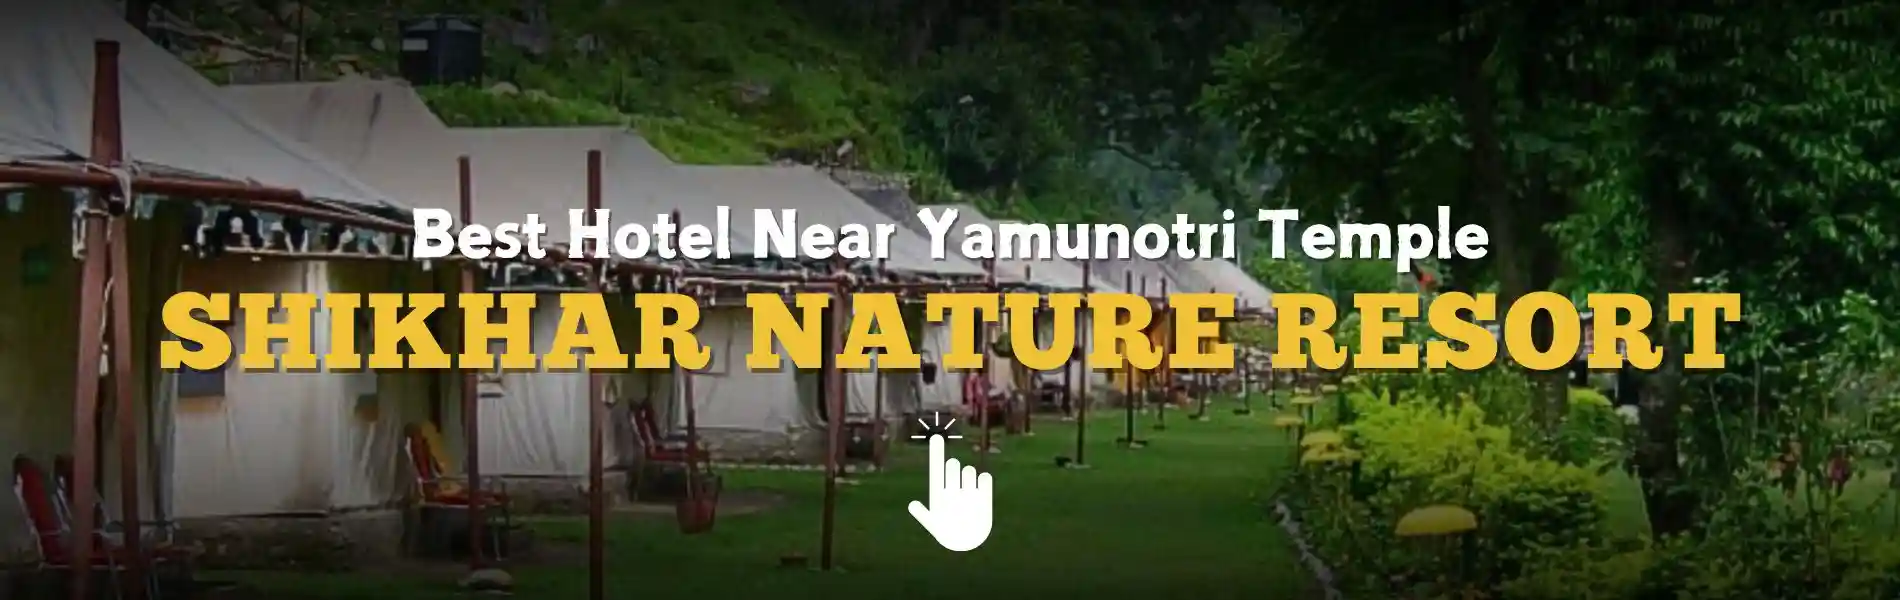 Hotels Near Yamunotri Temple